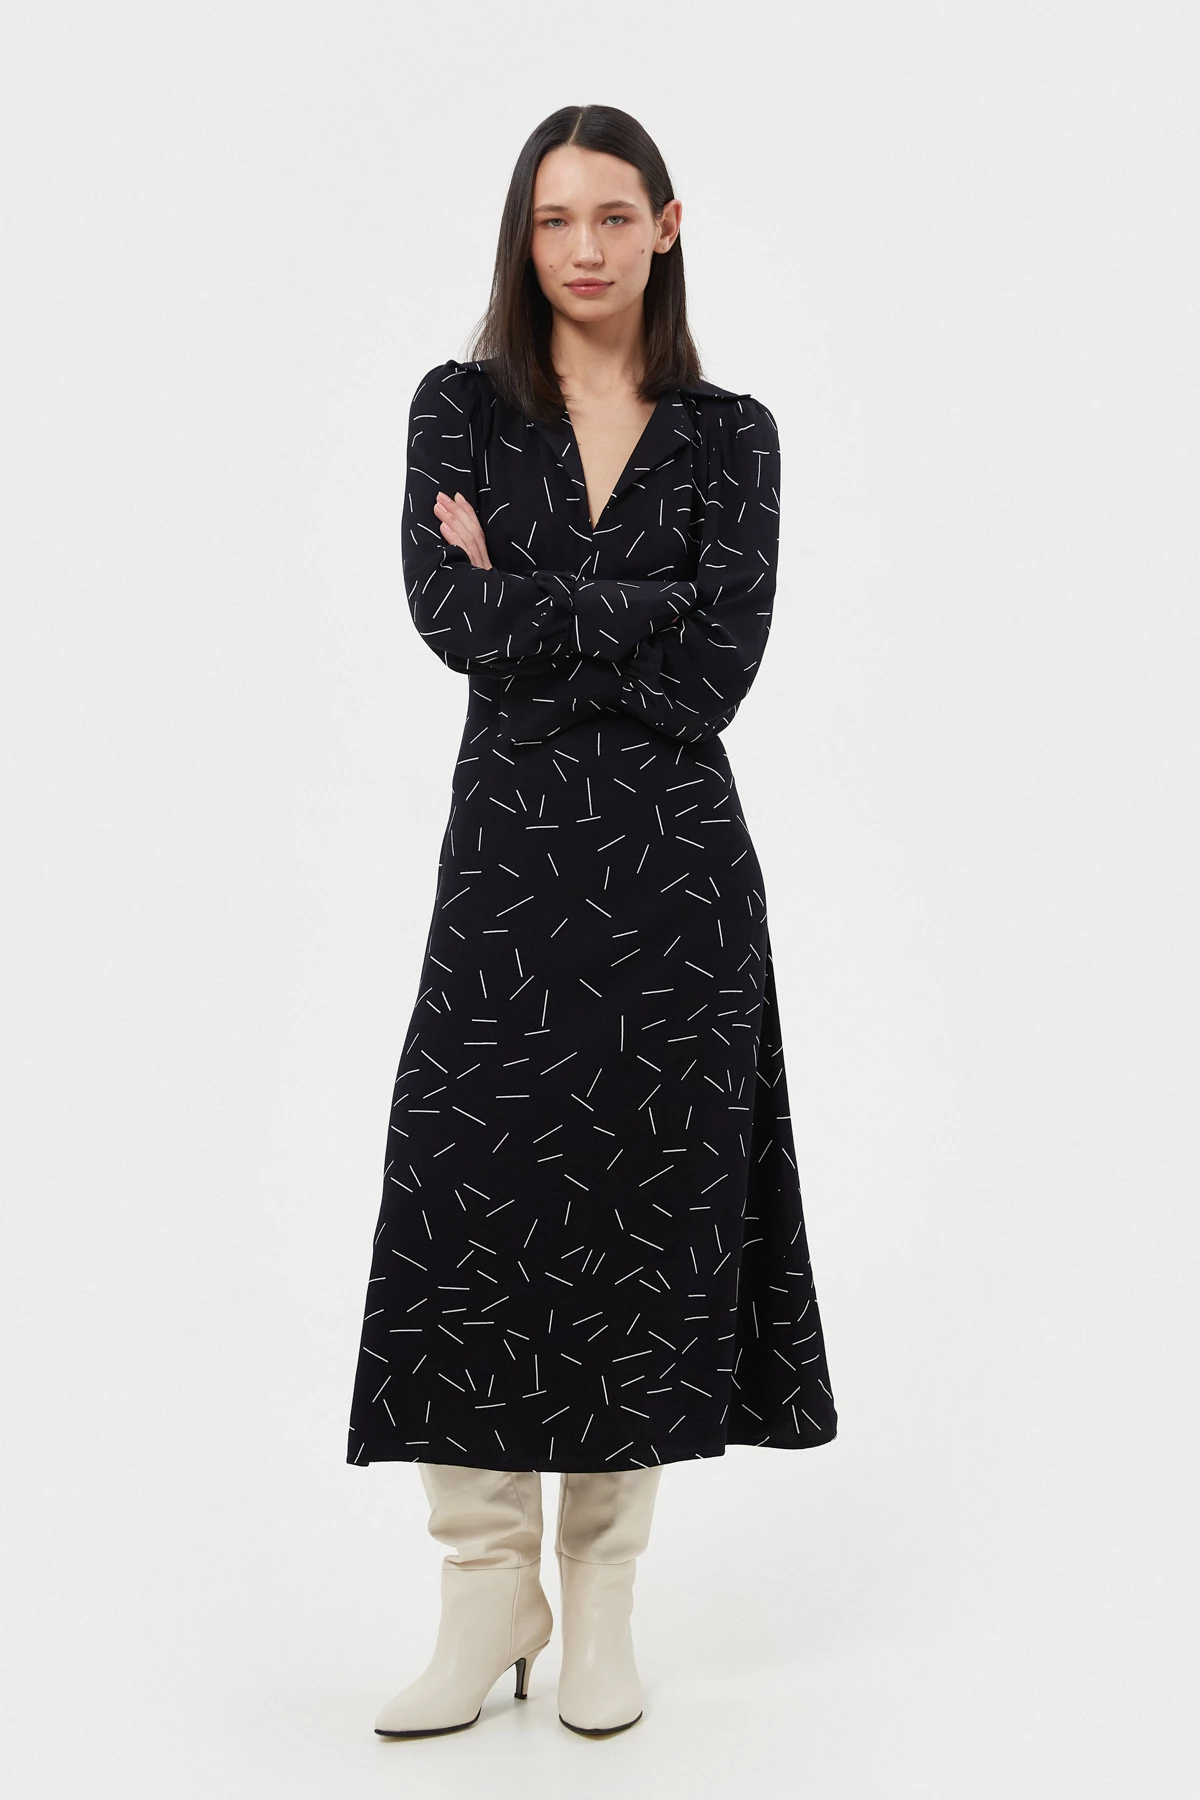 Black viscose midi dress in geometric print, photo 2